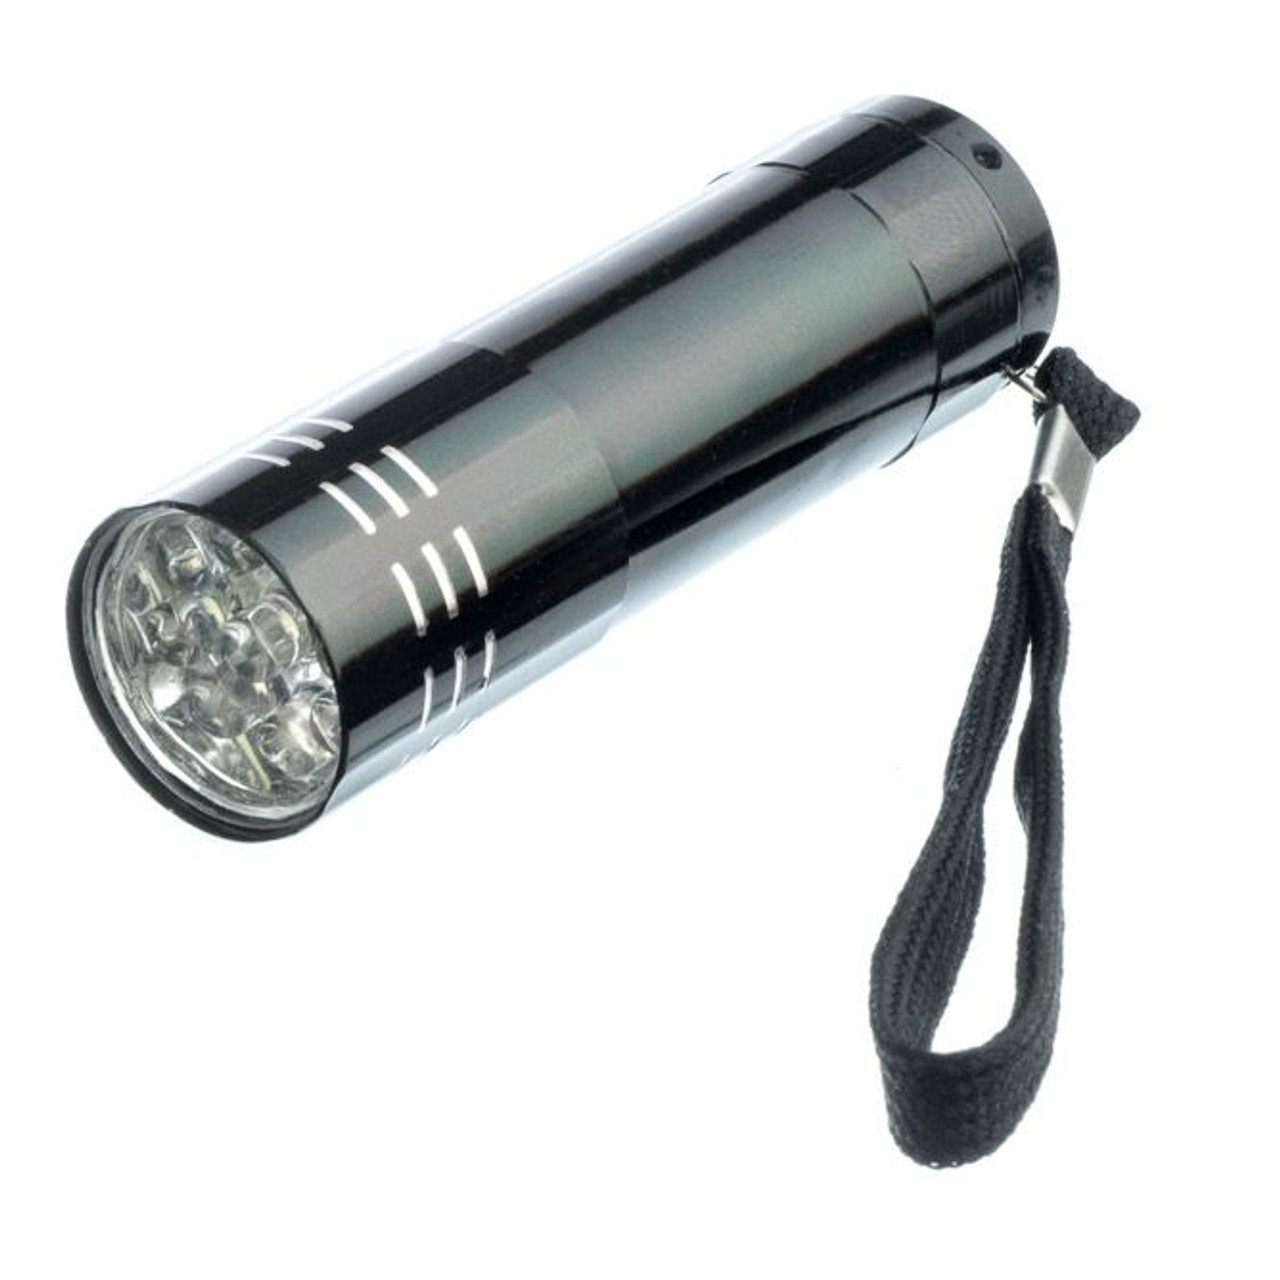 https://cdn11.bigcommerce.com/s-tumf4kk1l4/images/stencil/1280x1280/products/3312/6058/compact-9-led-aluminum-flashlight-with-wrist-strap-3-1-4-long-27__02110.1640715355.jpg?c=1?imbypass=on